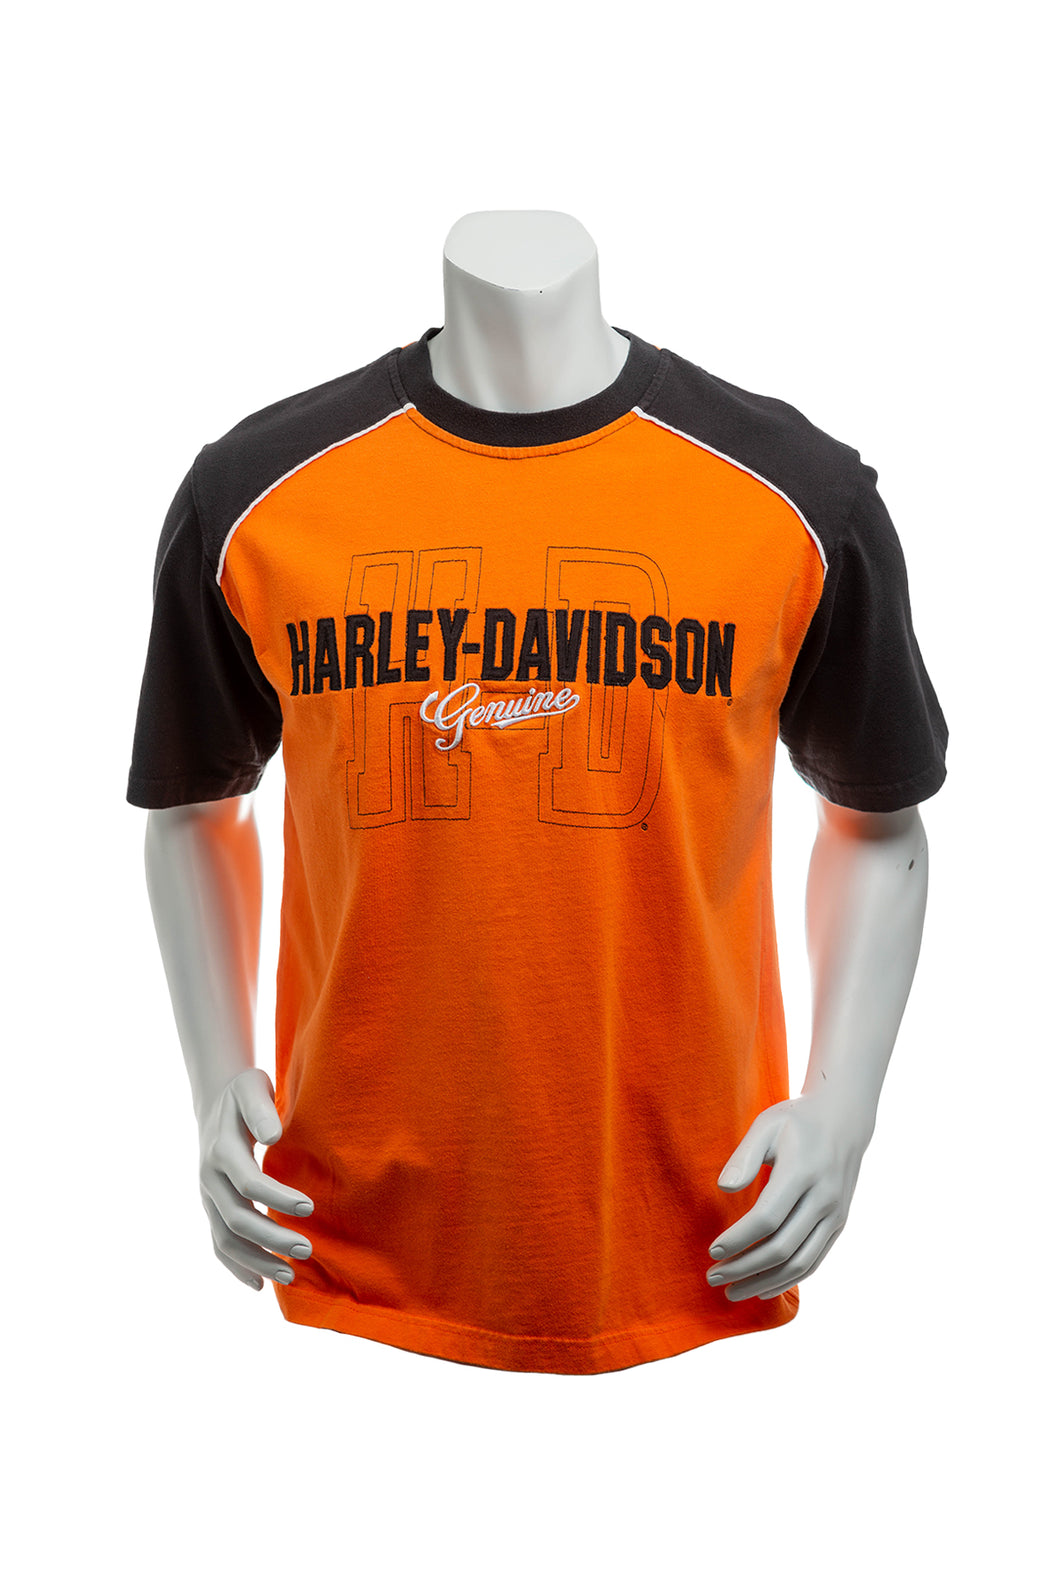 Harley Davidson 2006 Embroidered T-Shirt Men's Medium